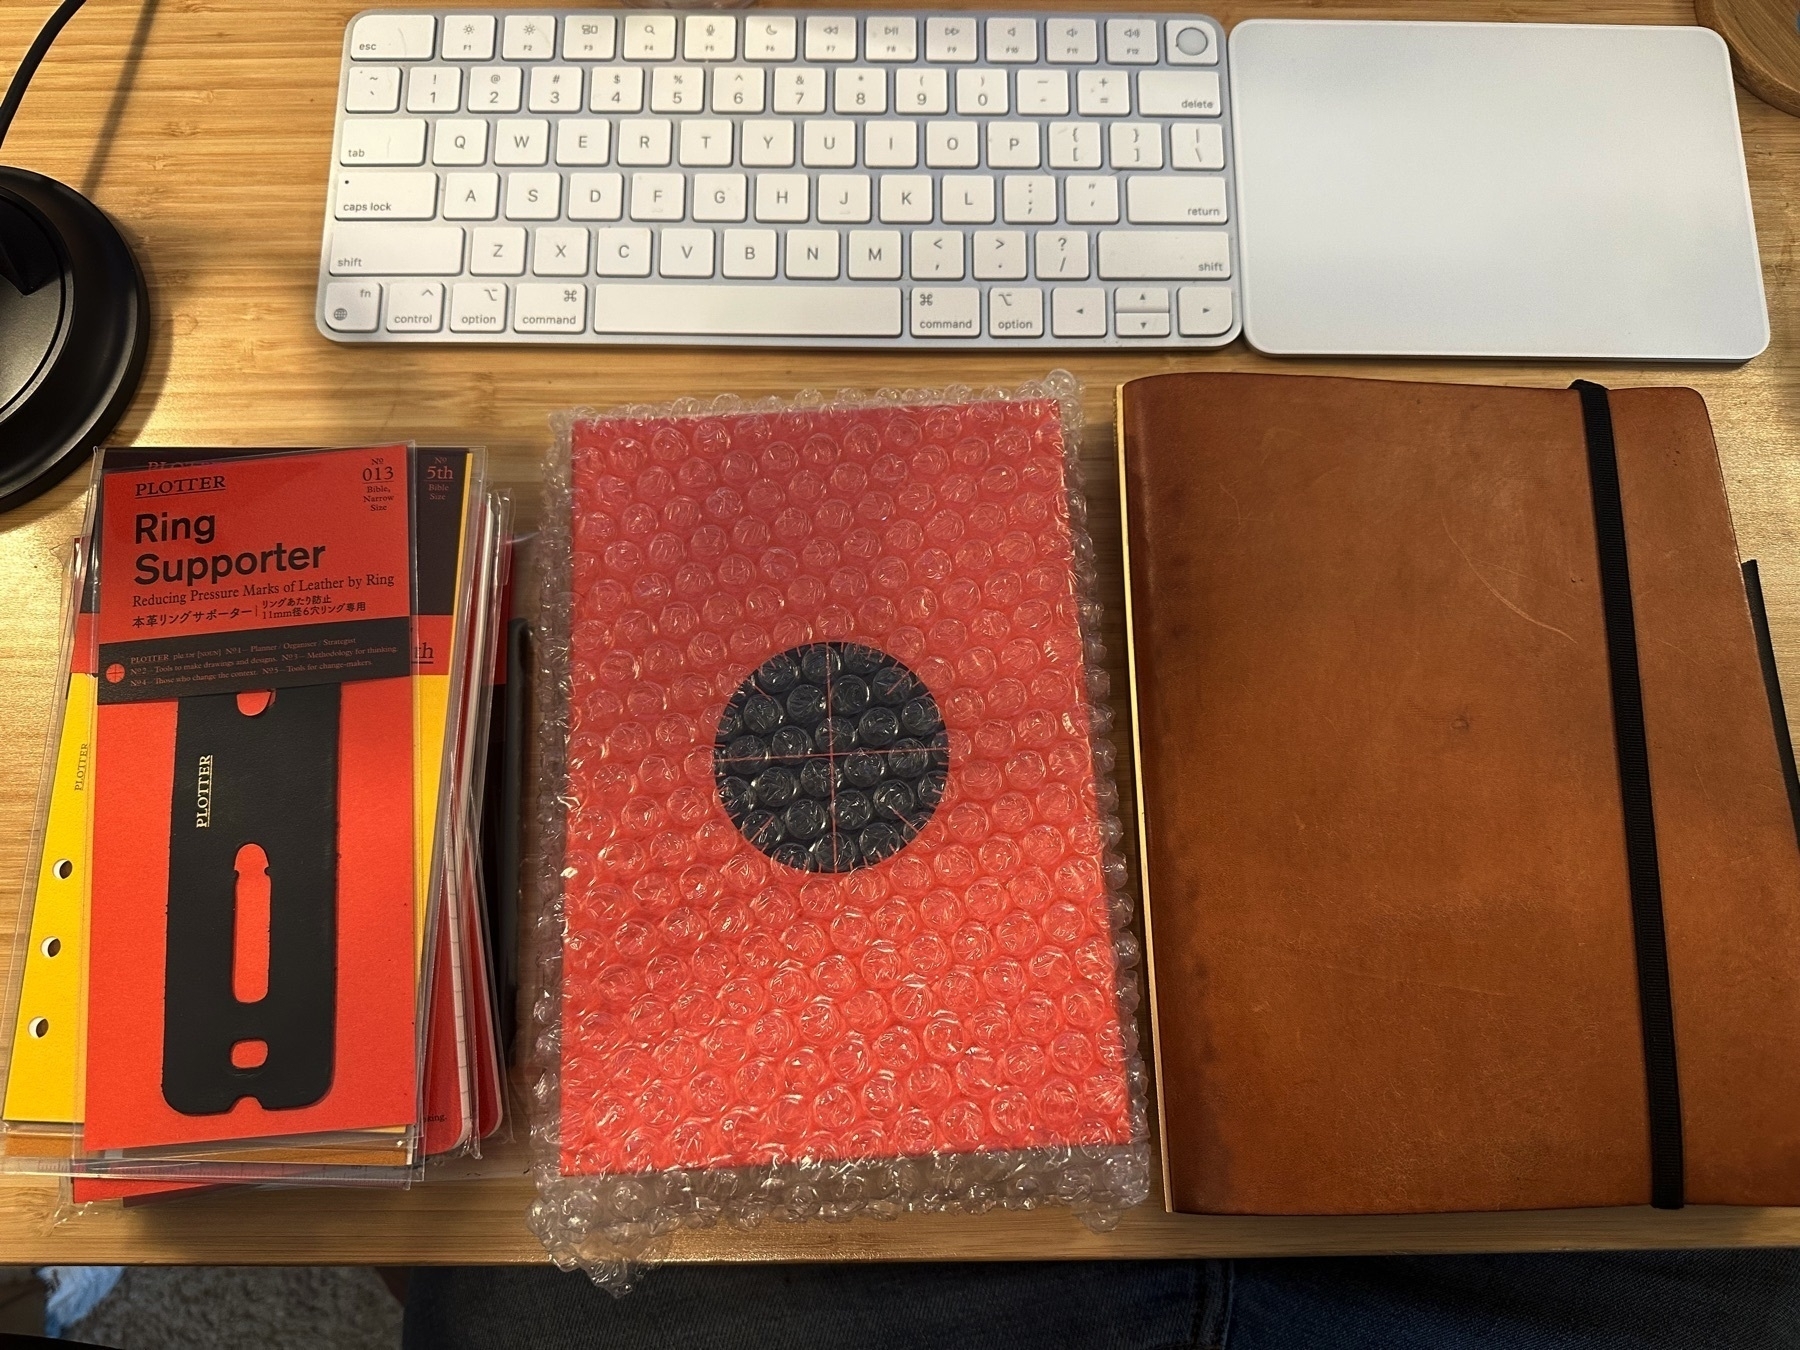 Plotter notebook supplies, a new, unopened plotter notebook, and my current A5 sized Plotter.